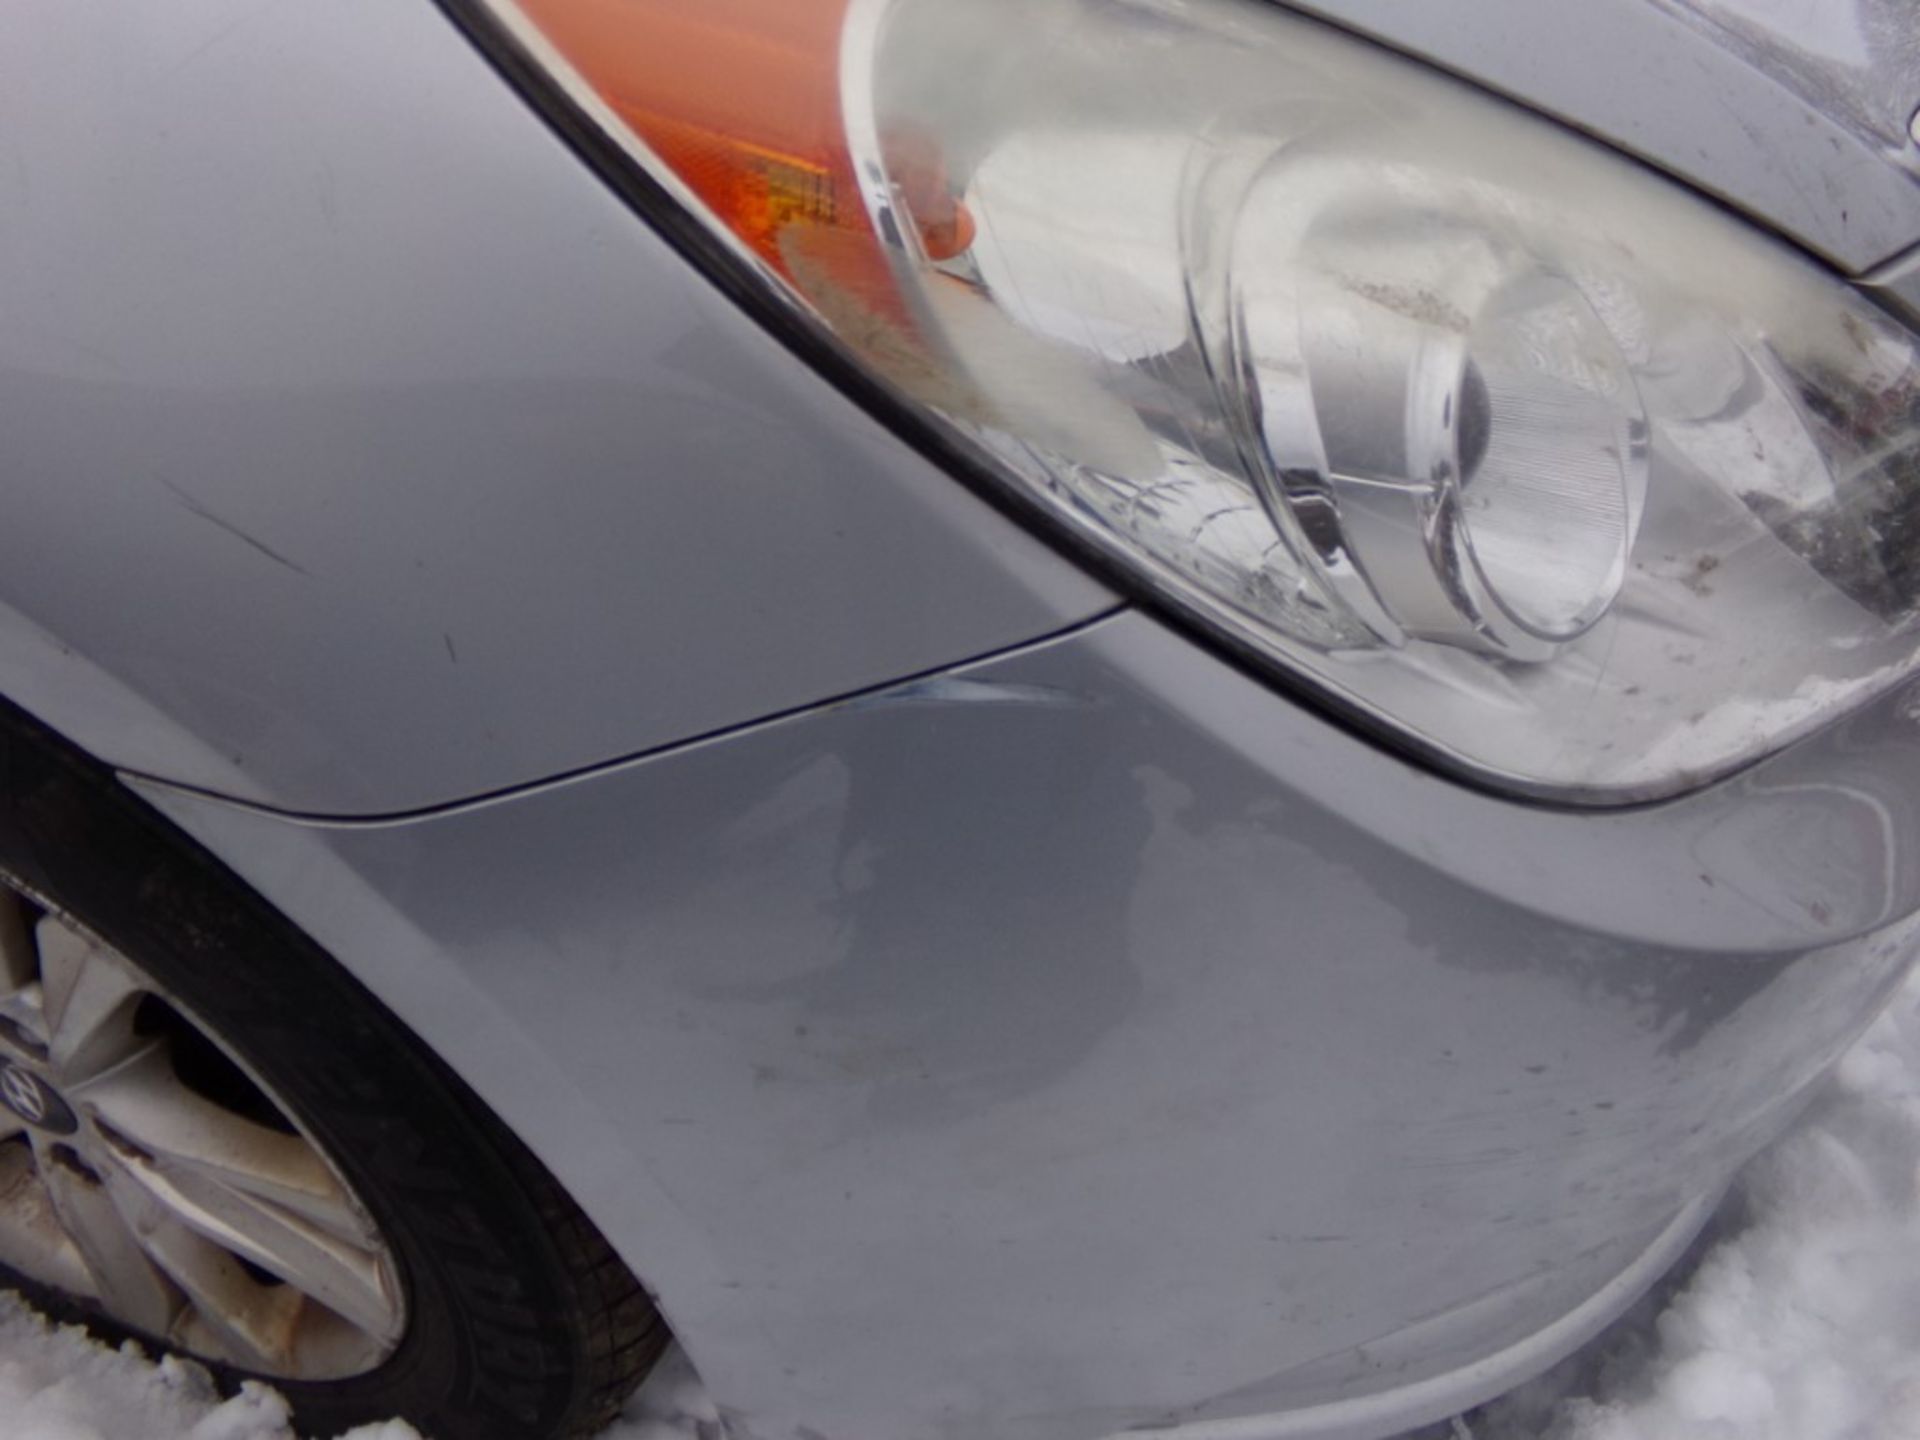 2011 Hyundai Sonata GLS, Silver, 125,632 Miles, VIN#:5NPEB4AC9BH077763, CHECK ENGINE LIGHT IS ON, - Image 8 of 10